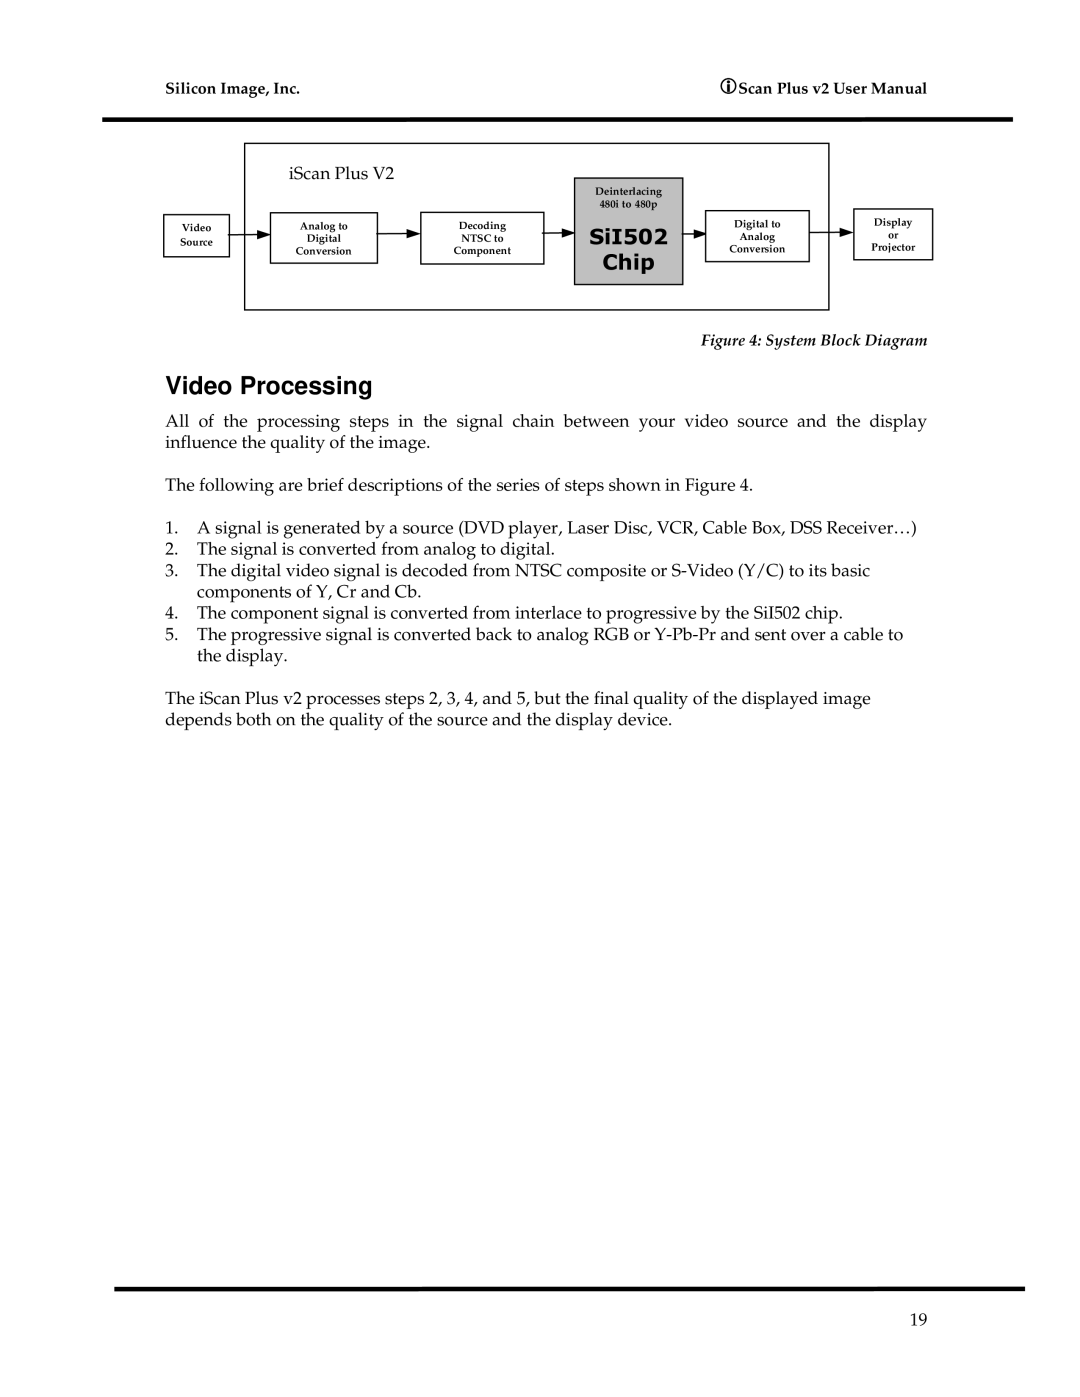 DVDO iScanPlus V2 manual Video Processing, iScan Plus 